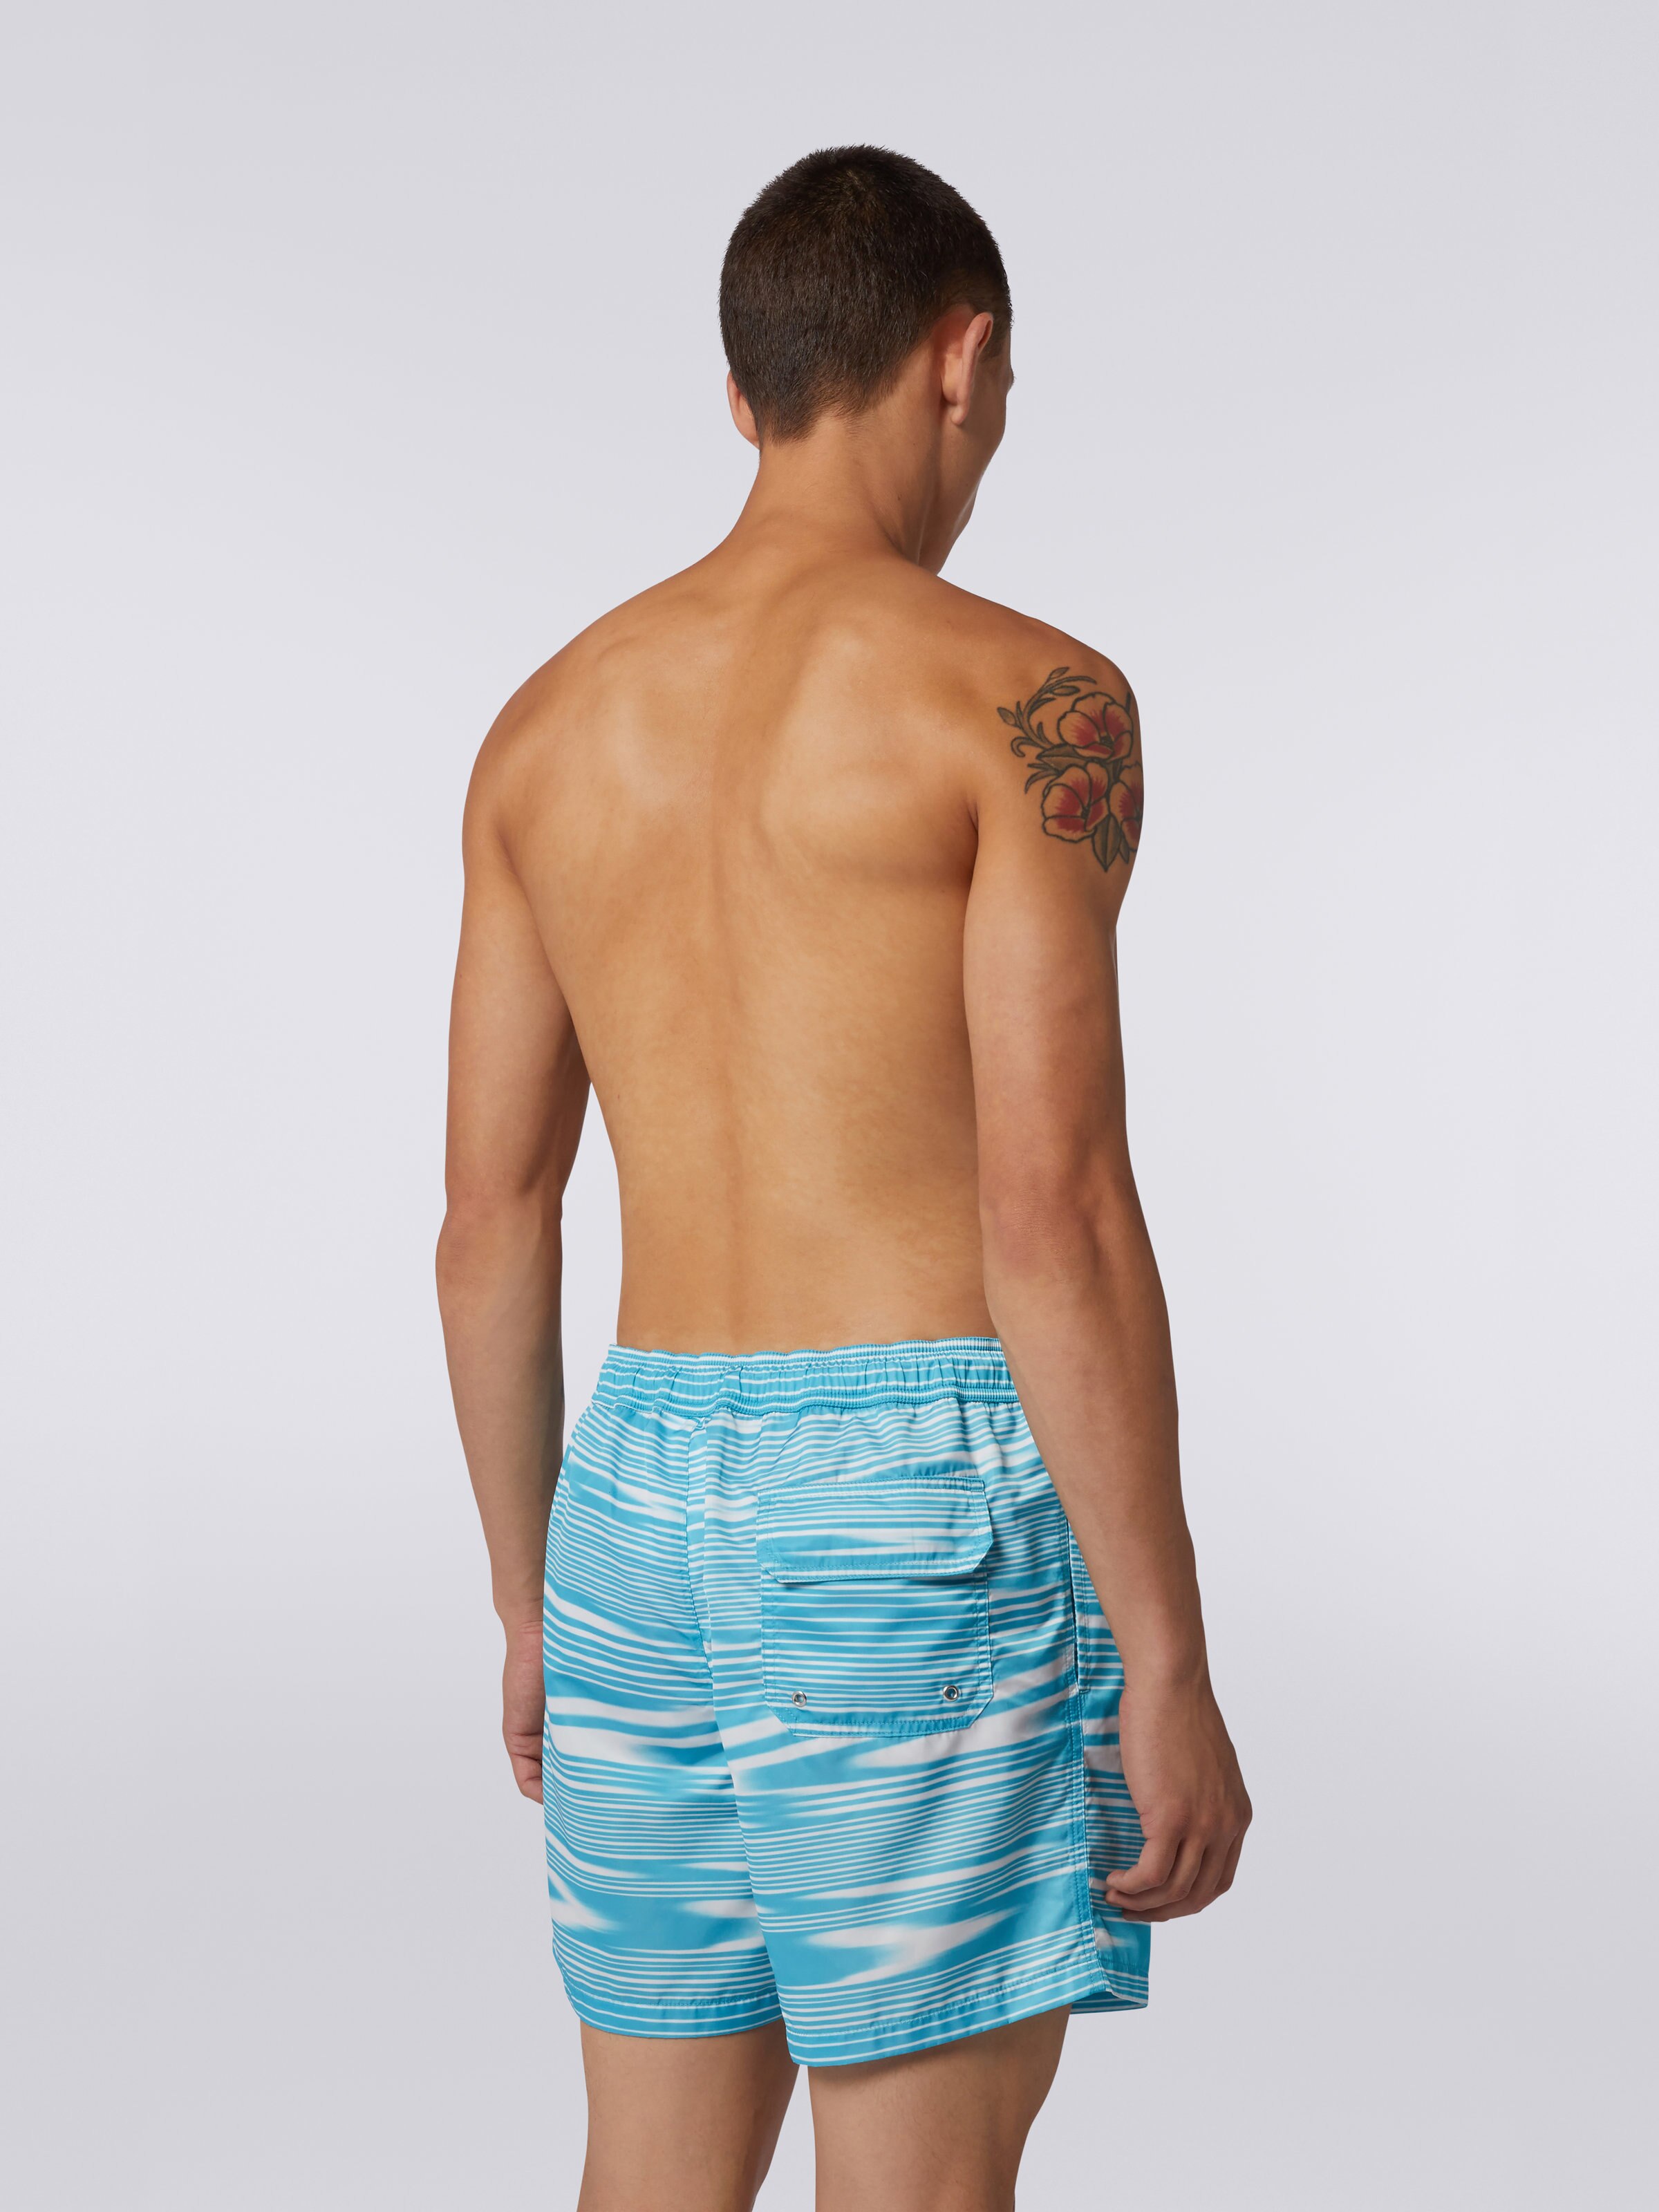 Nylon blend swimming trunks with two-tone slub motif, White & Light Blue - 3